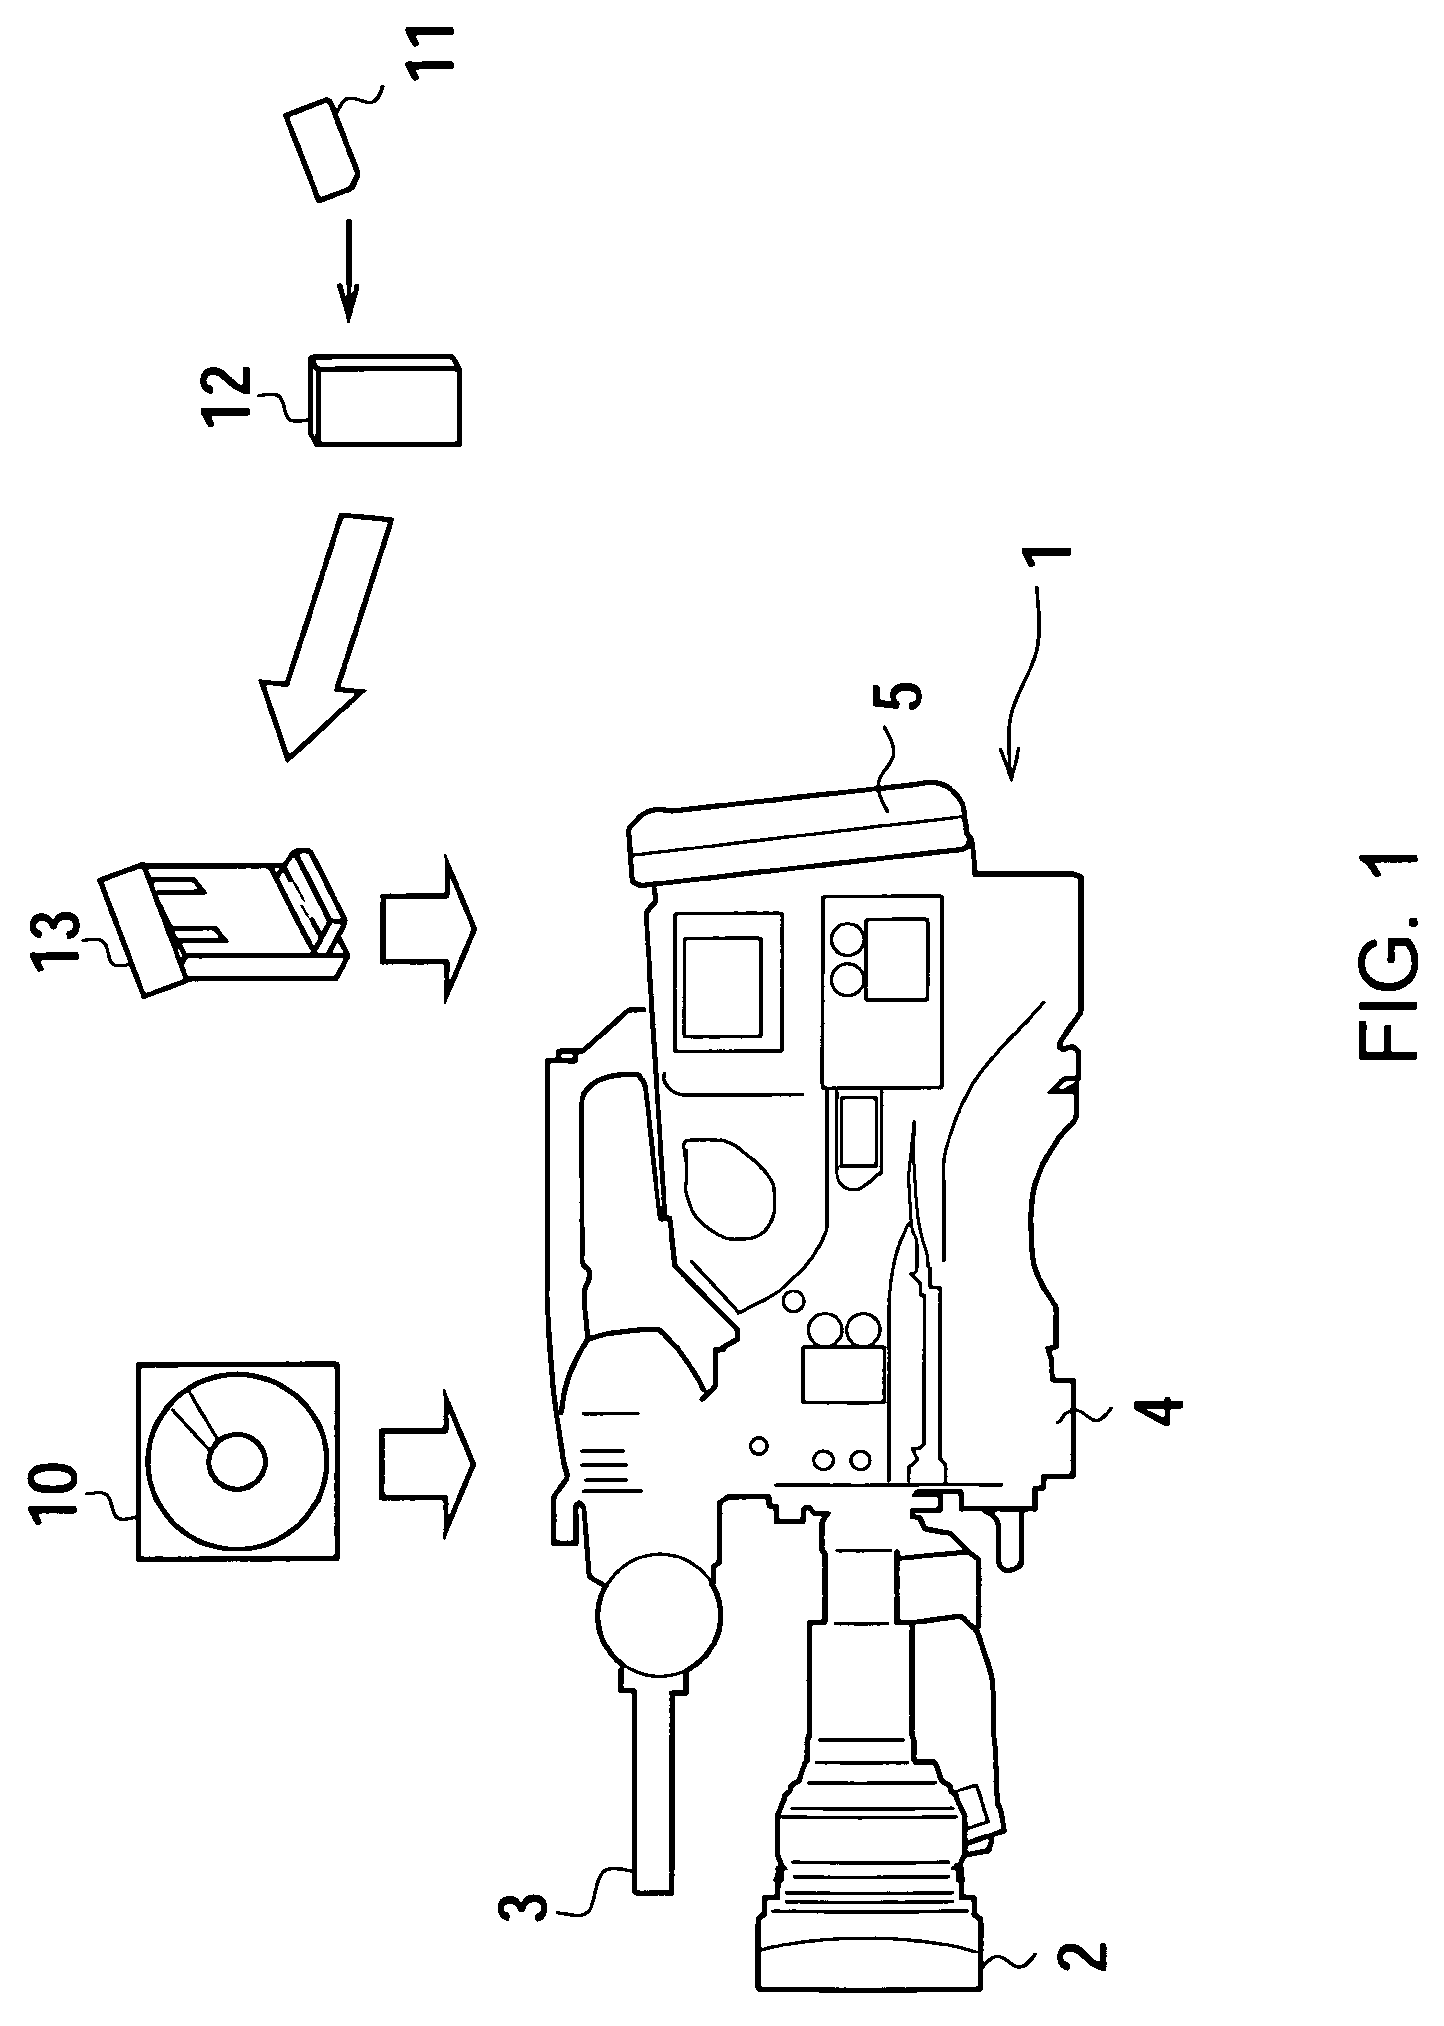 Recording apparatus and mount control method